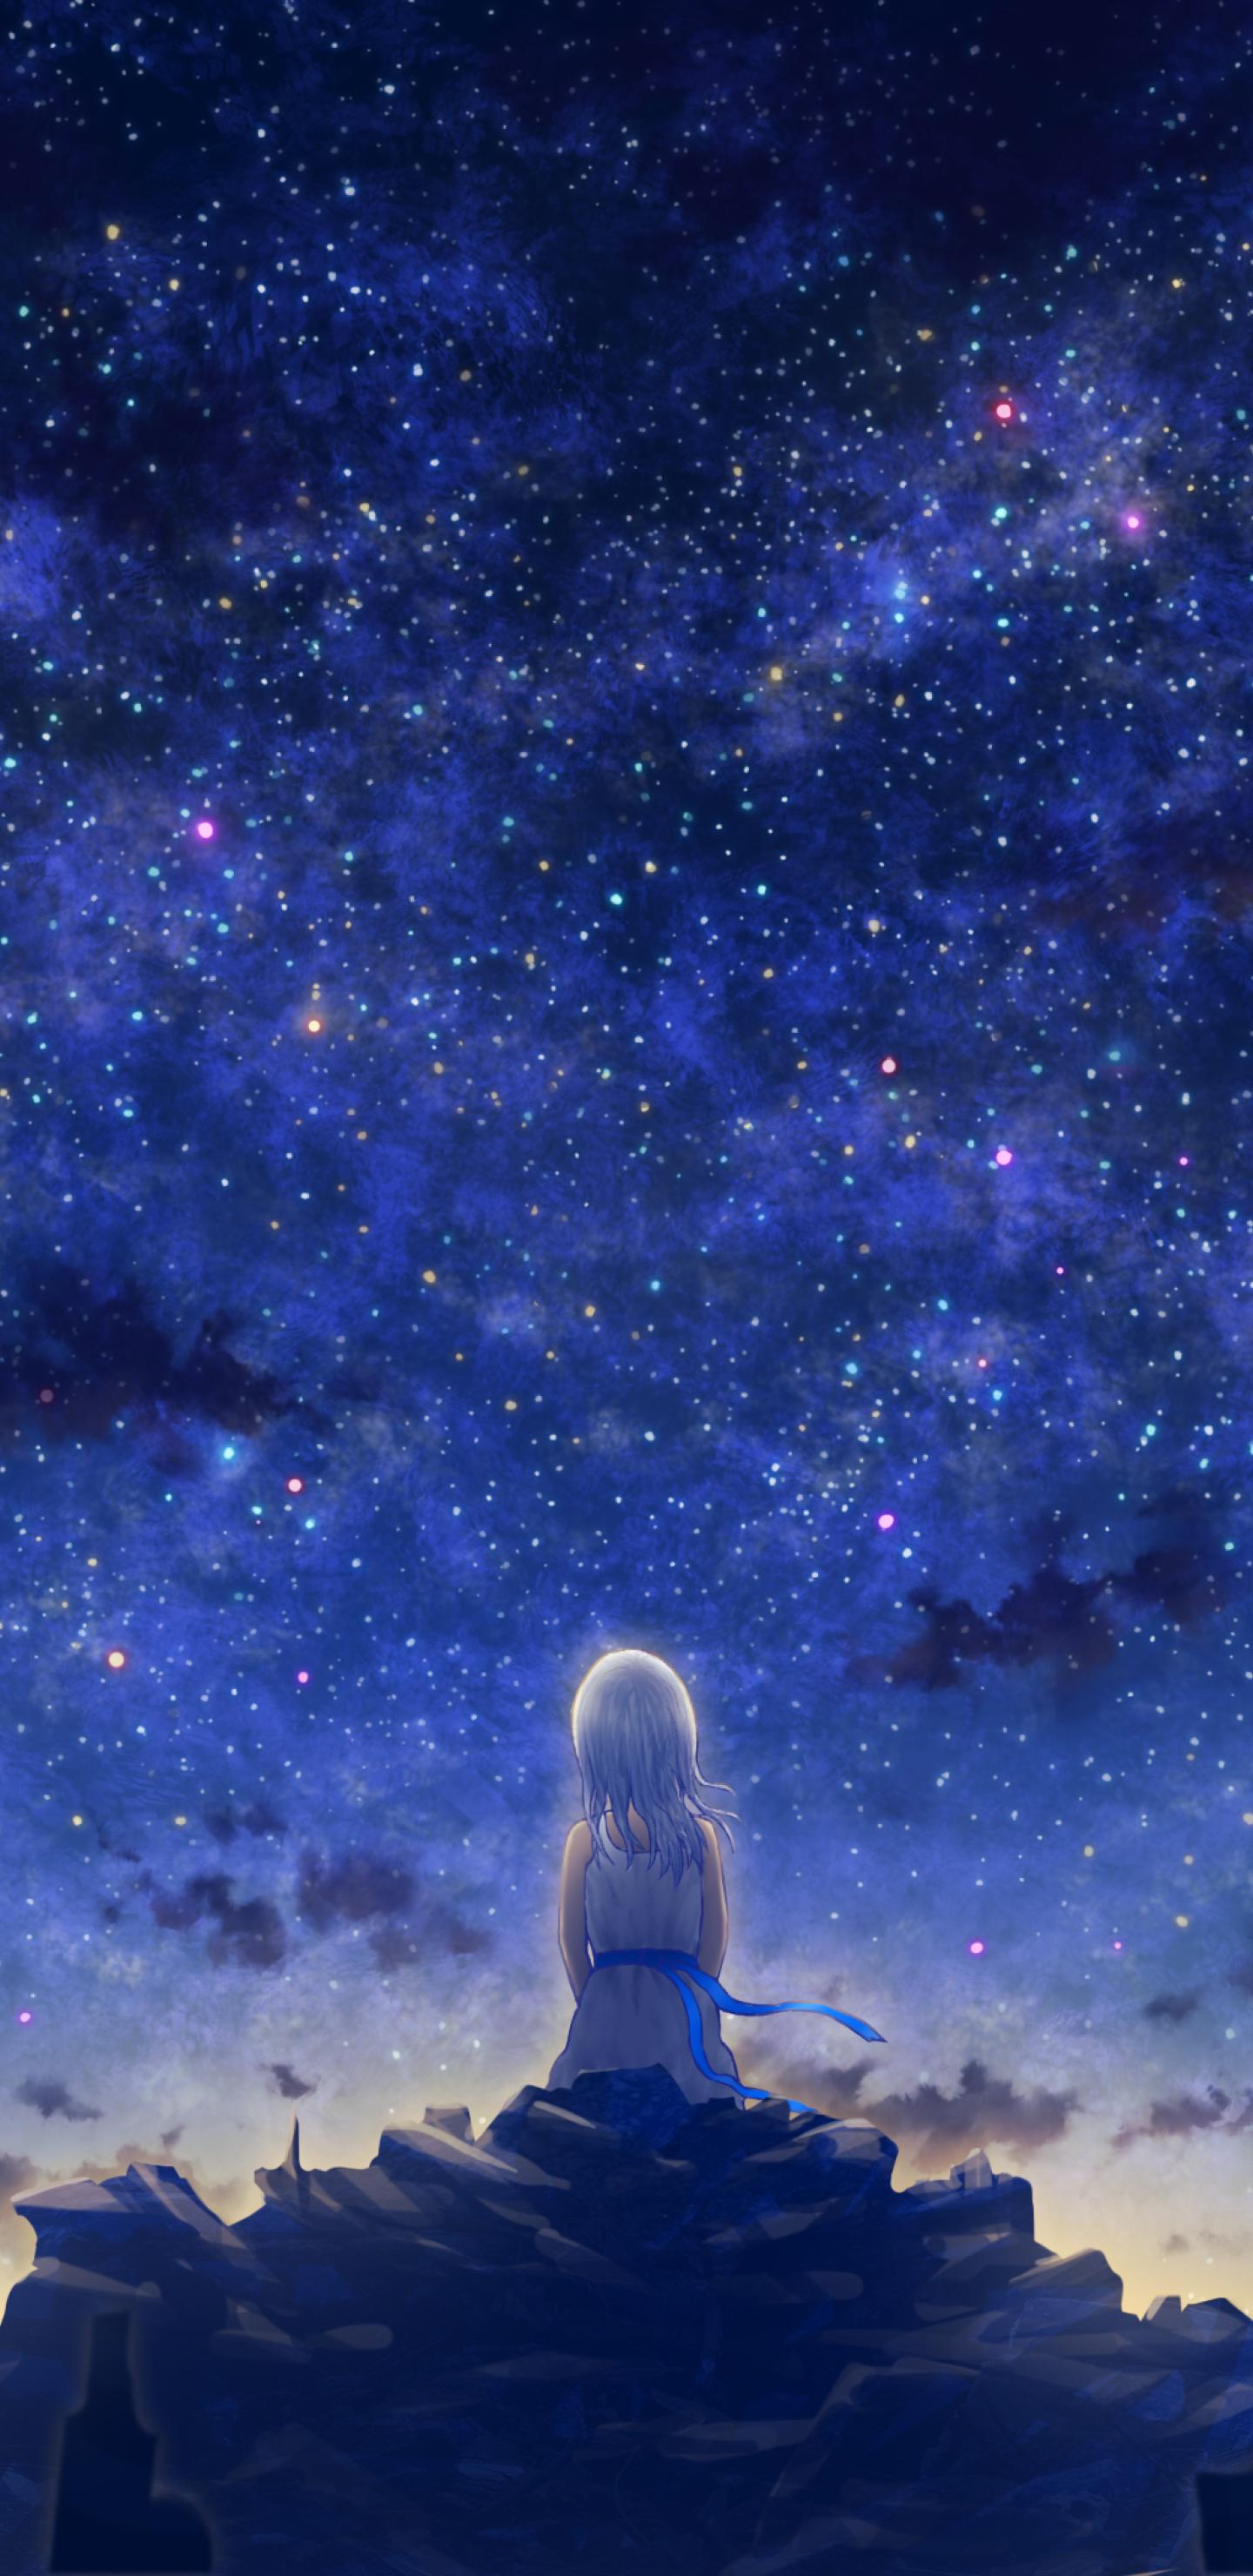 Anime Galaxy Wallpaper #galaxy #animegalaxy #galaxywallpaper #galaxylove  #sky #stars #kawaii #colors #art #ezmkurd #wall… | Galaxy art, Fantasy art,  Animation art